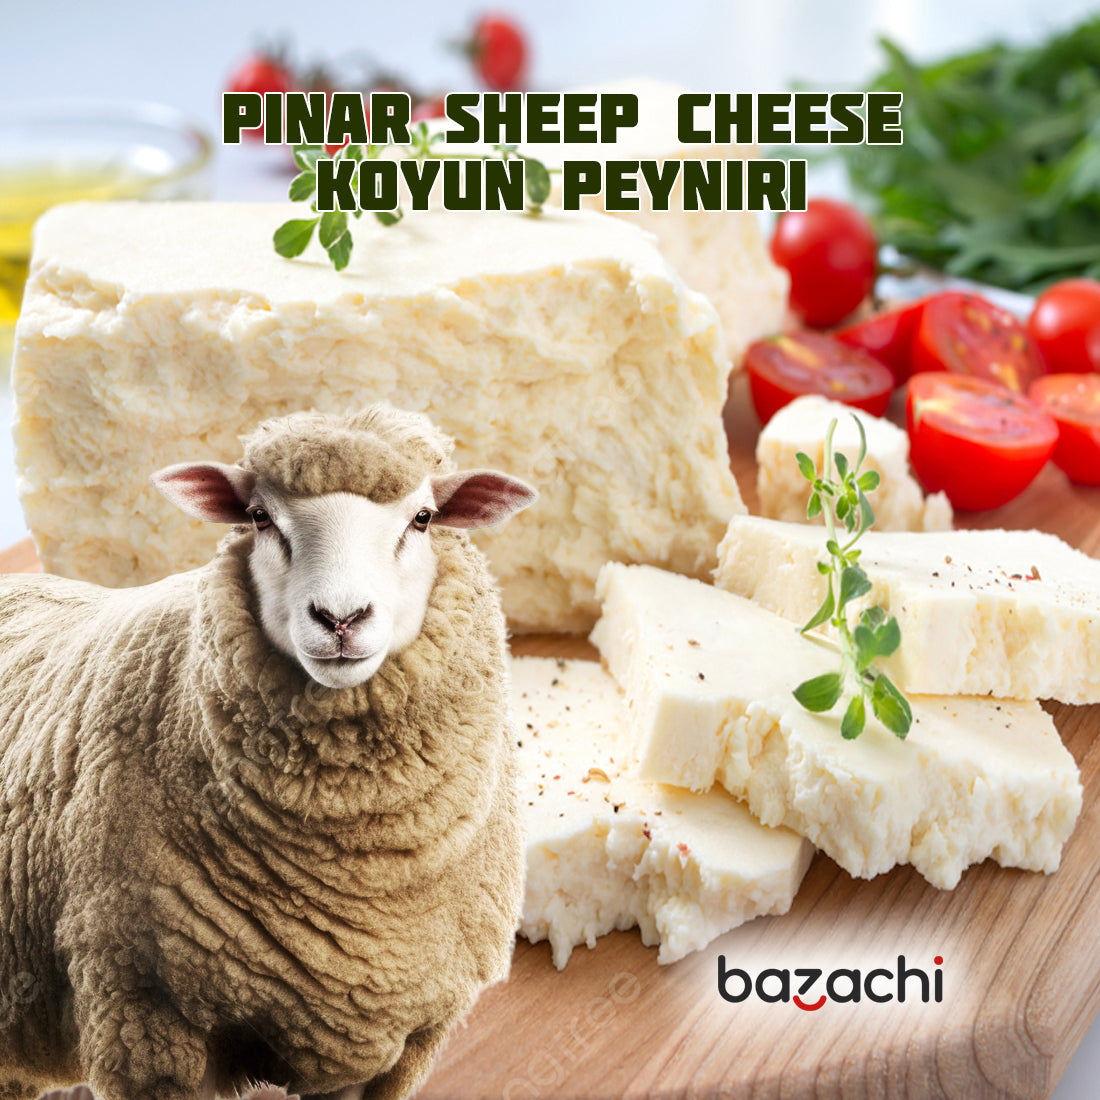 Pinar Sheep Cheese 1500g Koyun Peyniri 50%